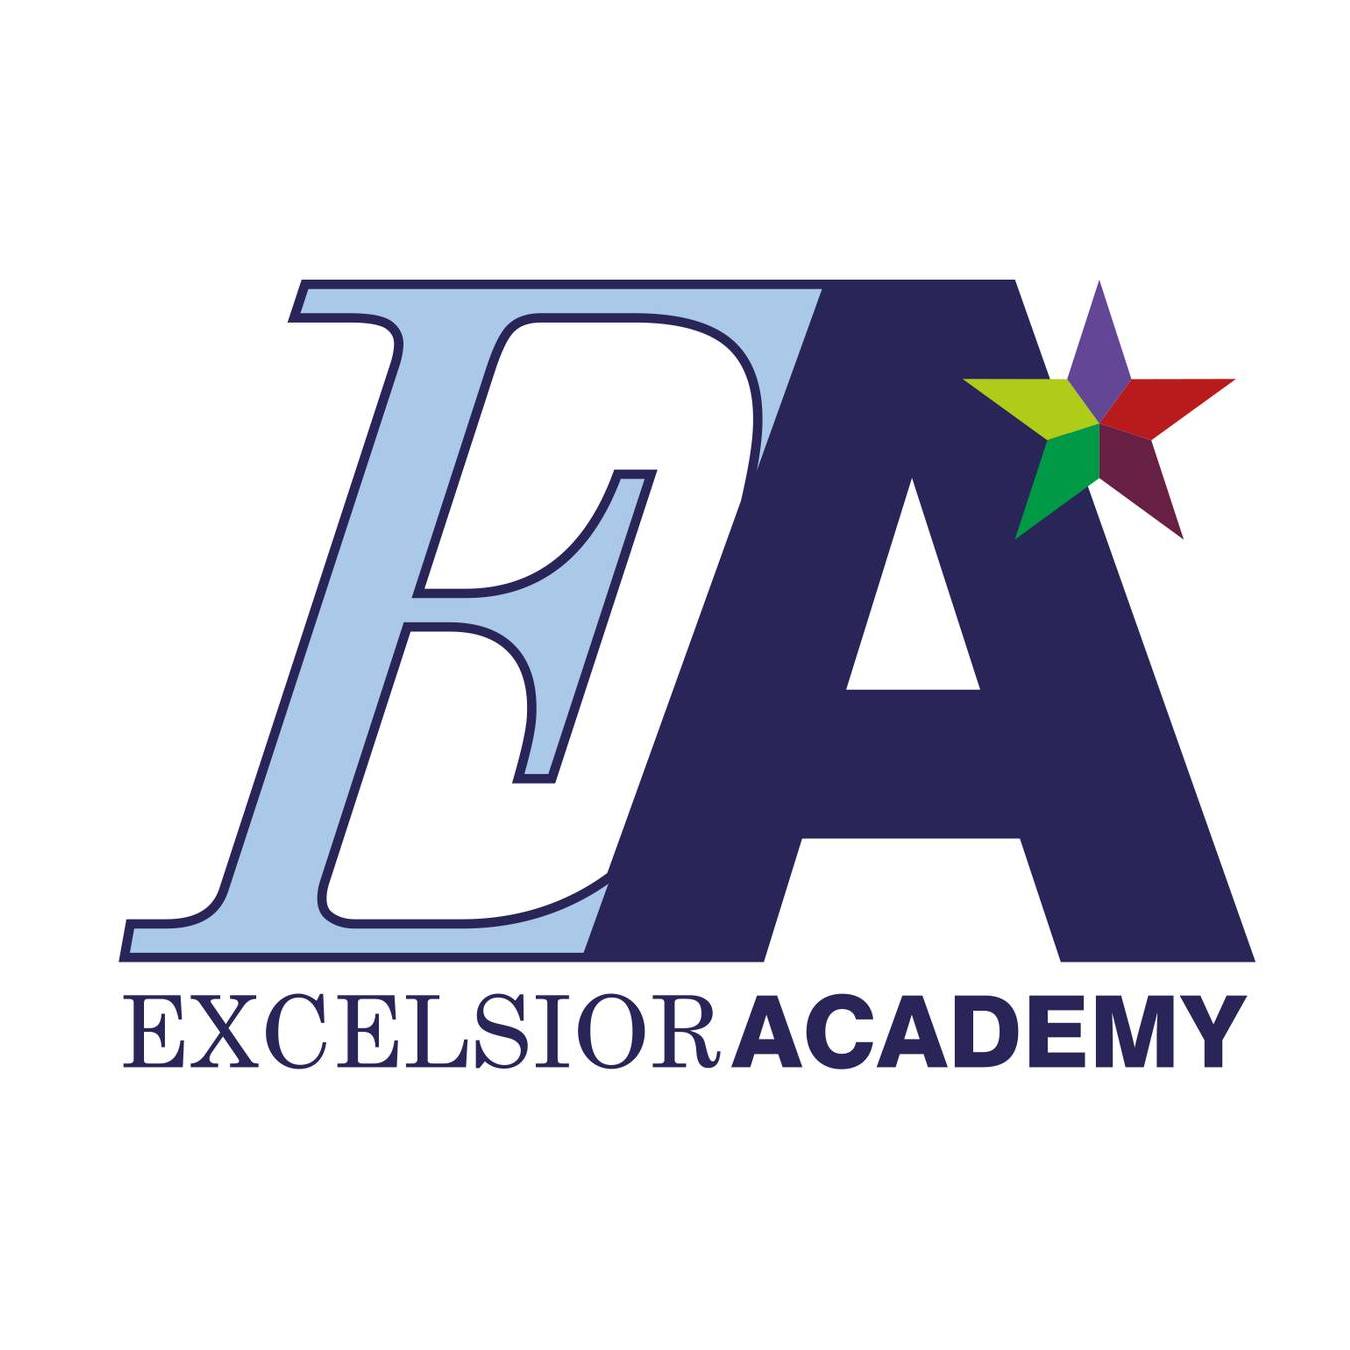 Excelsior Academy校徽